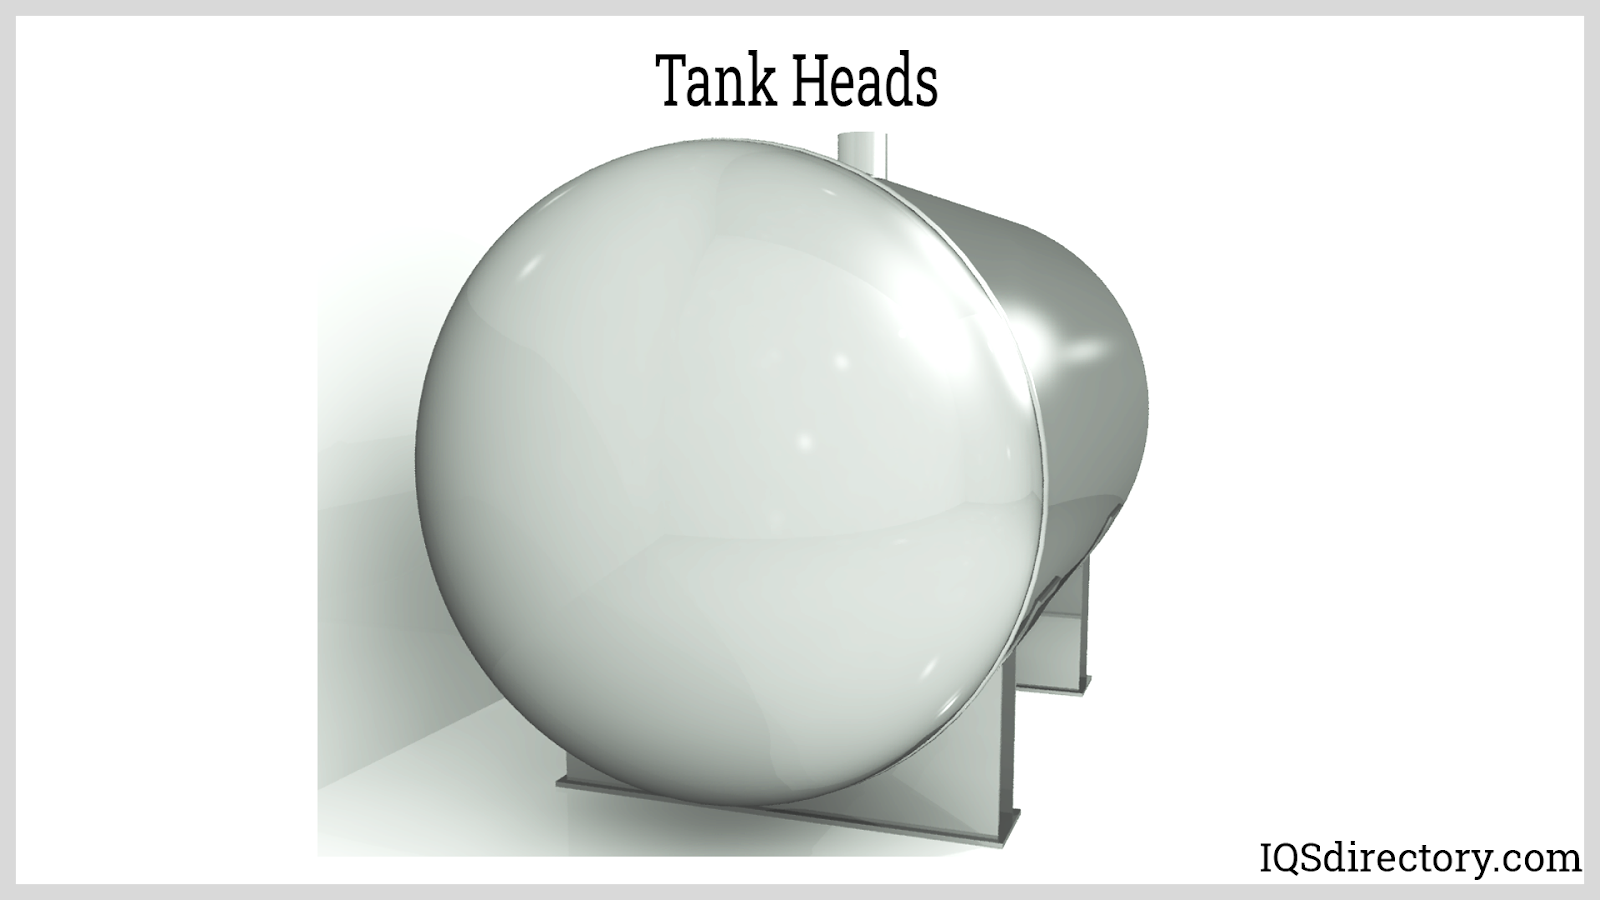 Tank Heads